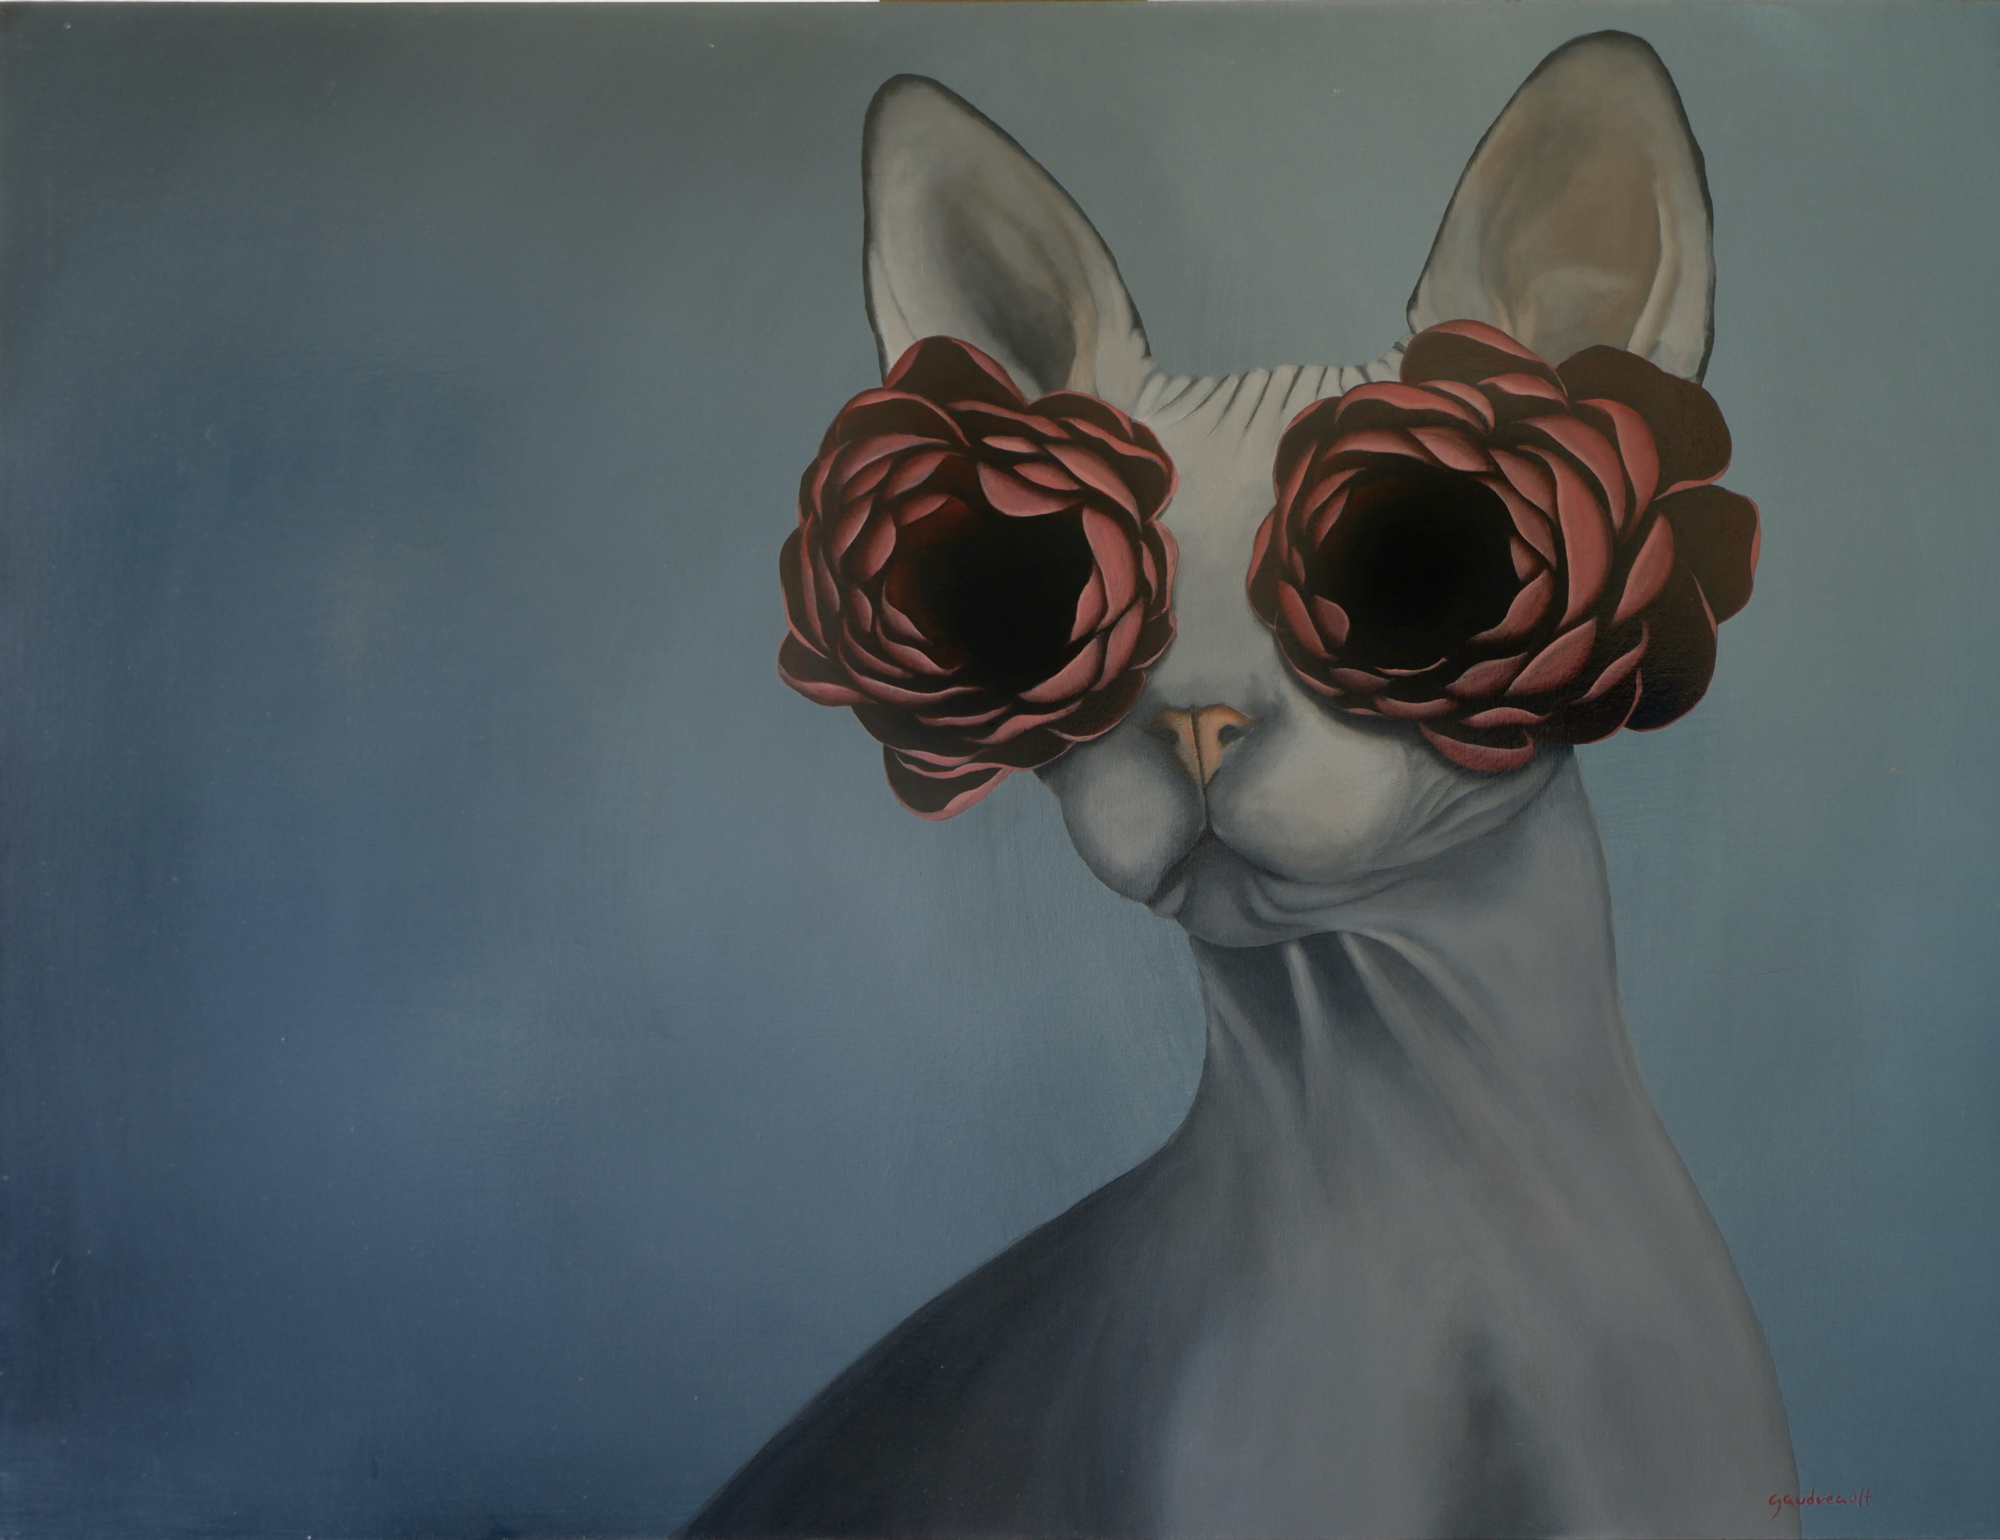 Rita, 2019, Acrylic on canvas, 36x48 in